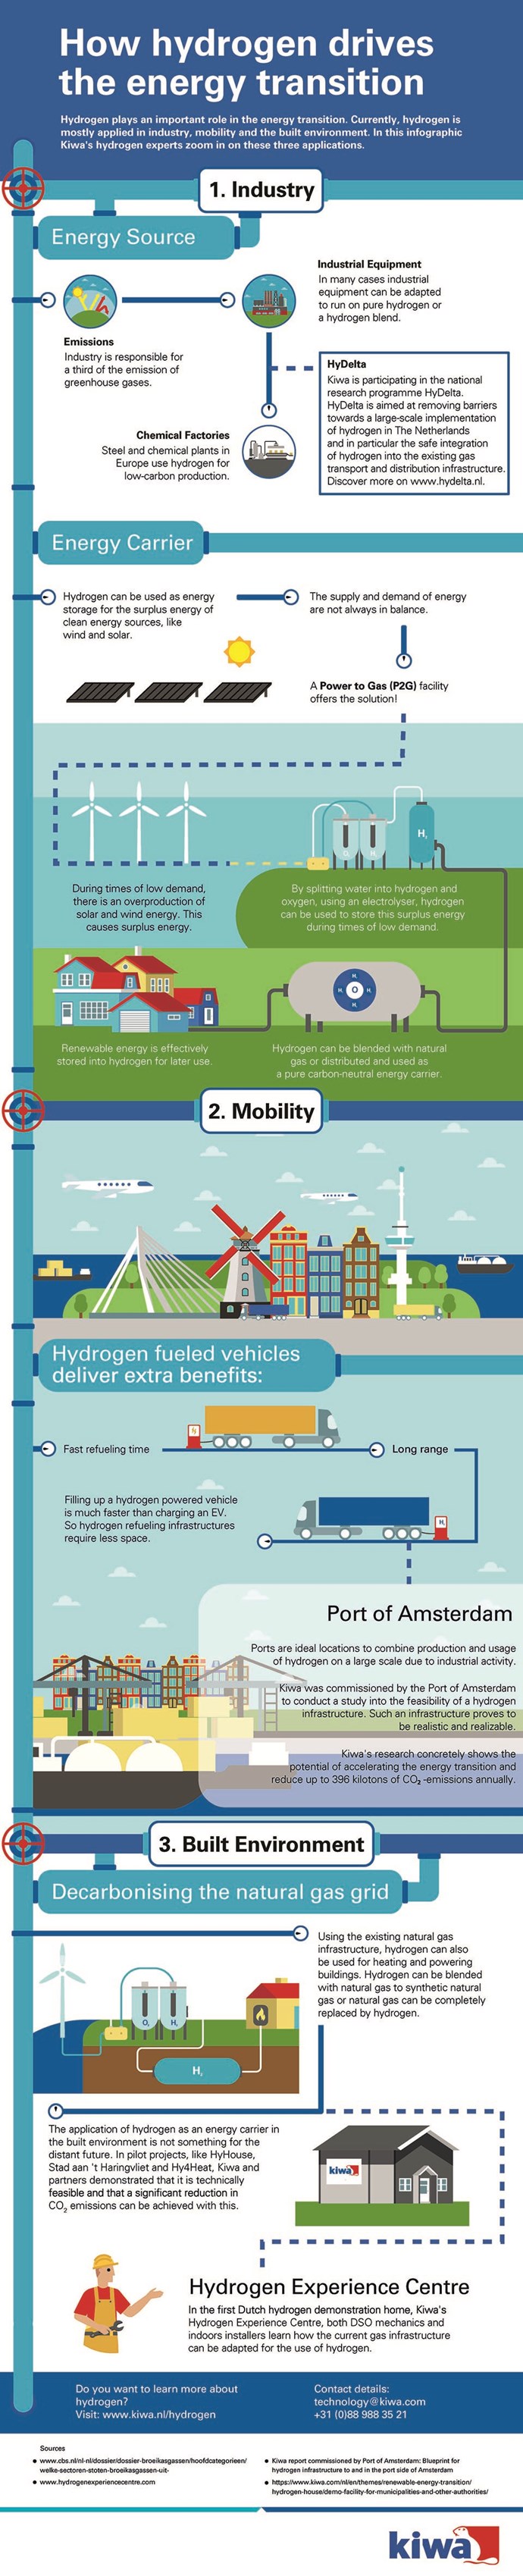 Kiwa_Infographic Hydrogen_How hydrogen drives the energy transition_EN.jpg